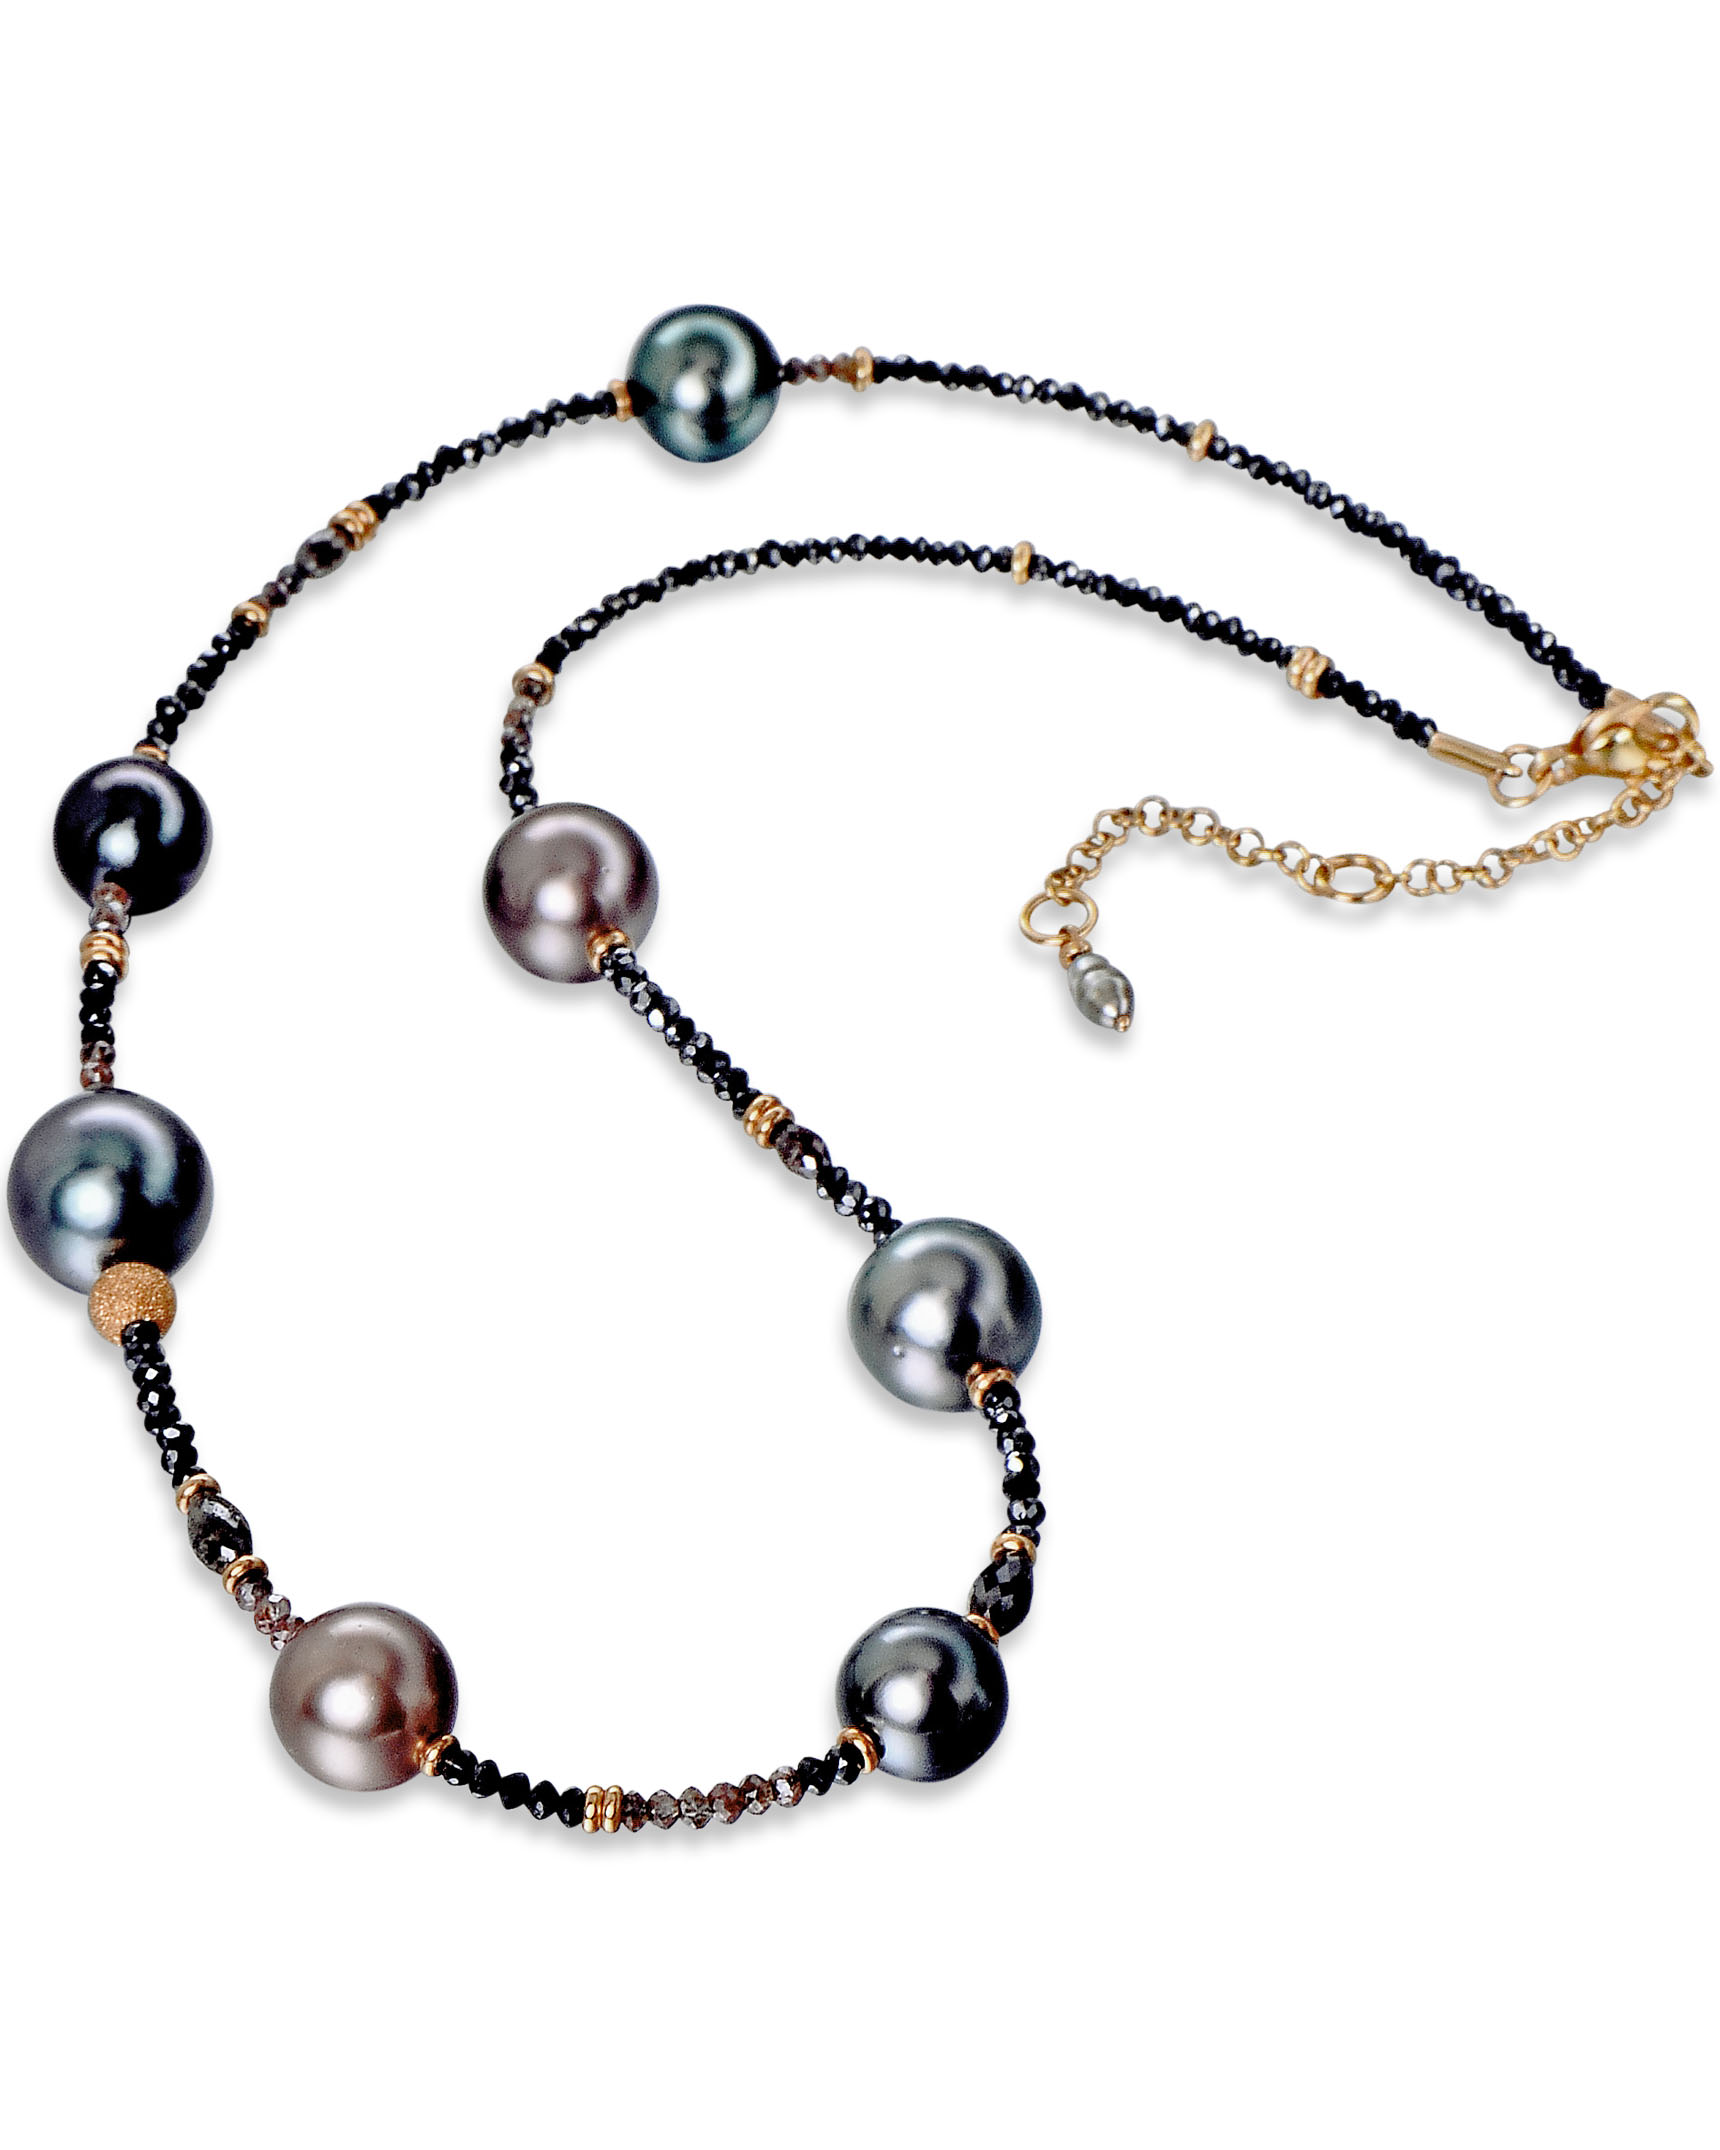 Diamond Pendants Necklaces - Buy Pendants and Necklaces Online For Women |  Jewelili